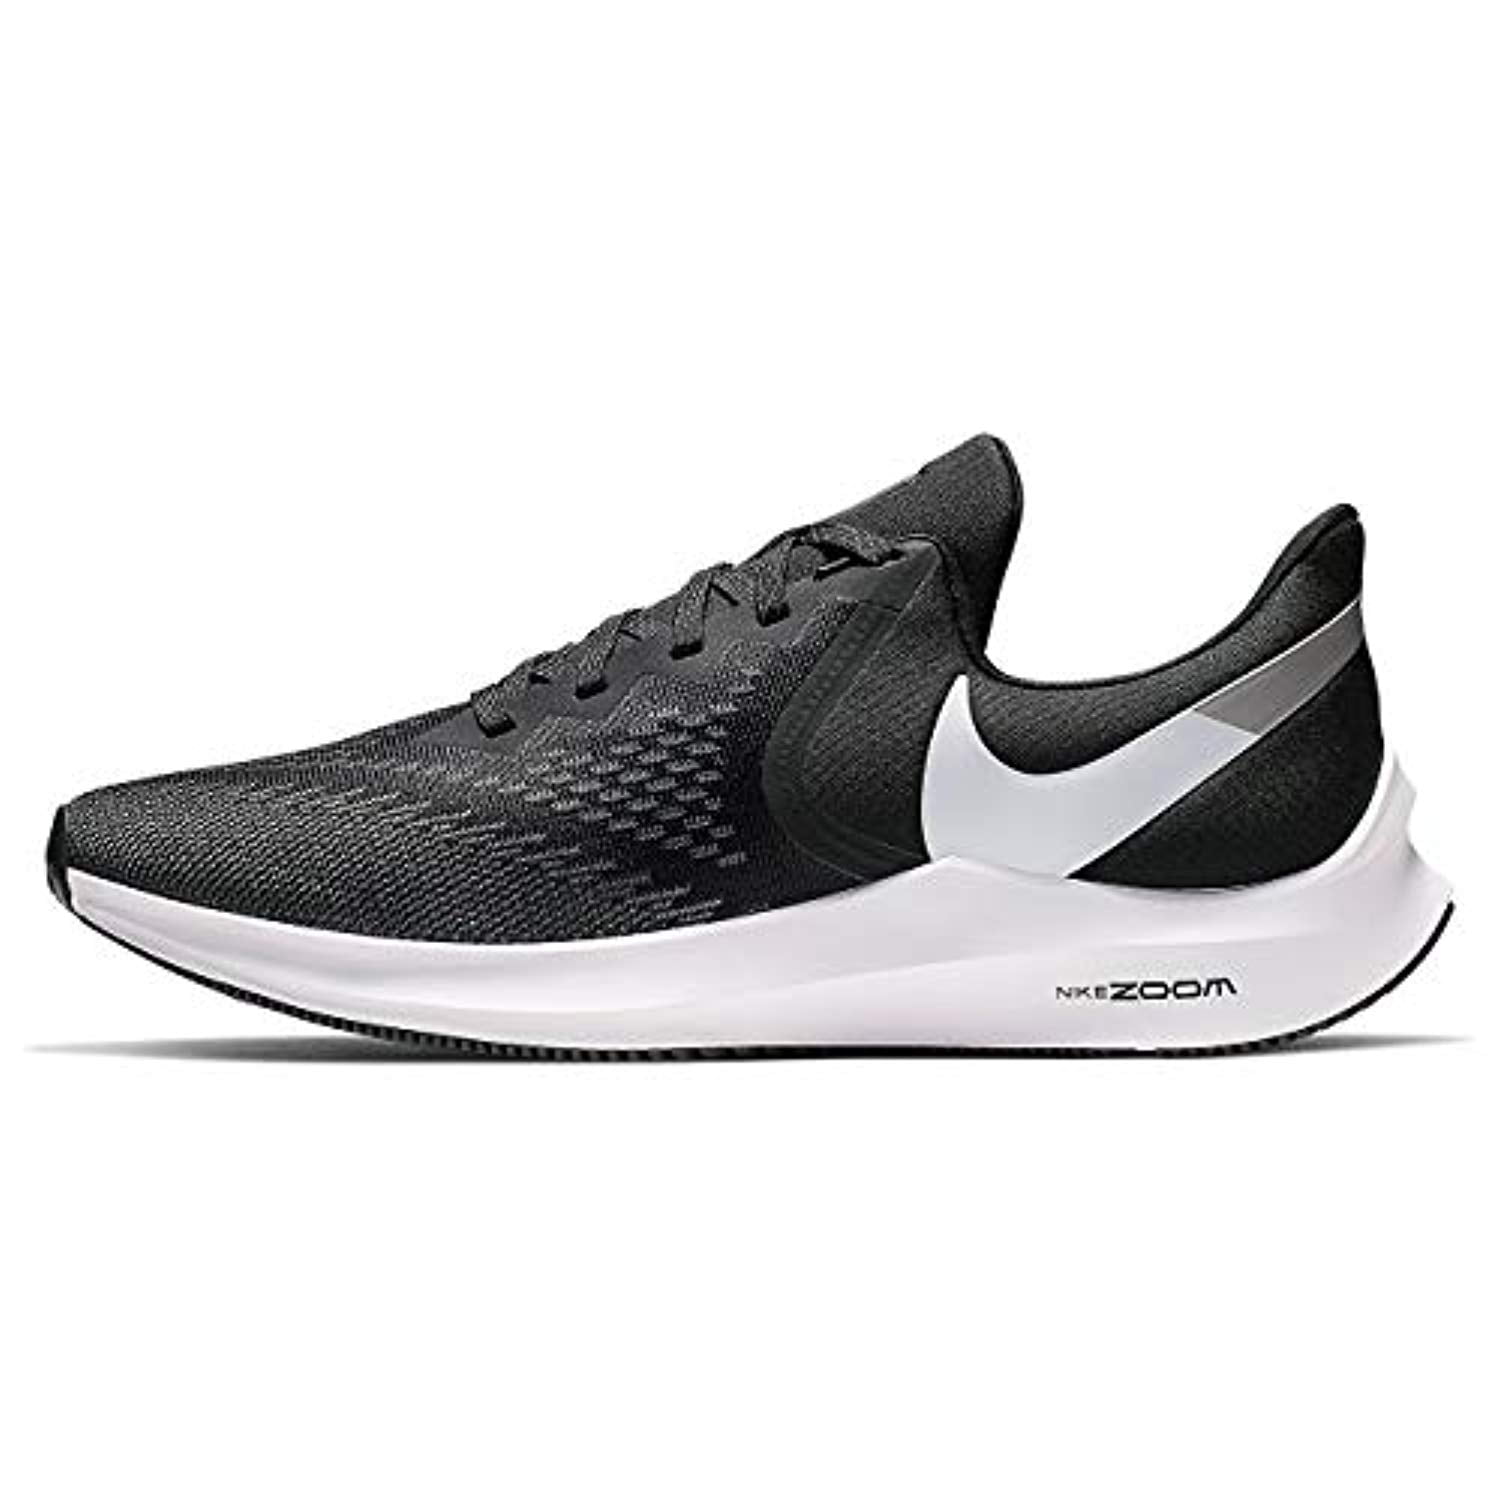 Nike Zoom Winflo 6 Mens Sneakers AQ7497-001, Black/White-Dark Grey-MTLC Platinum, Size 8.5 - Walmart.com